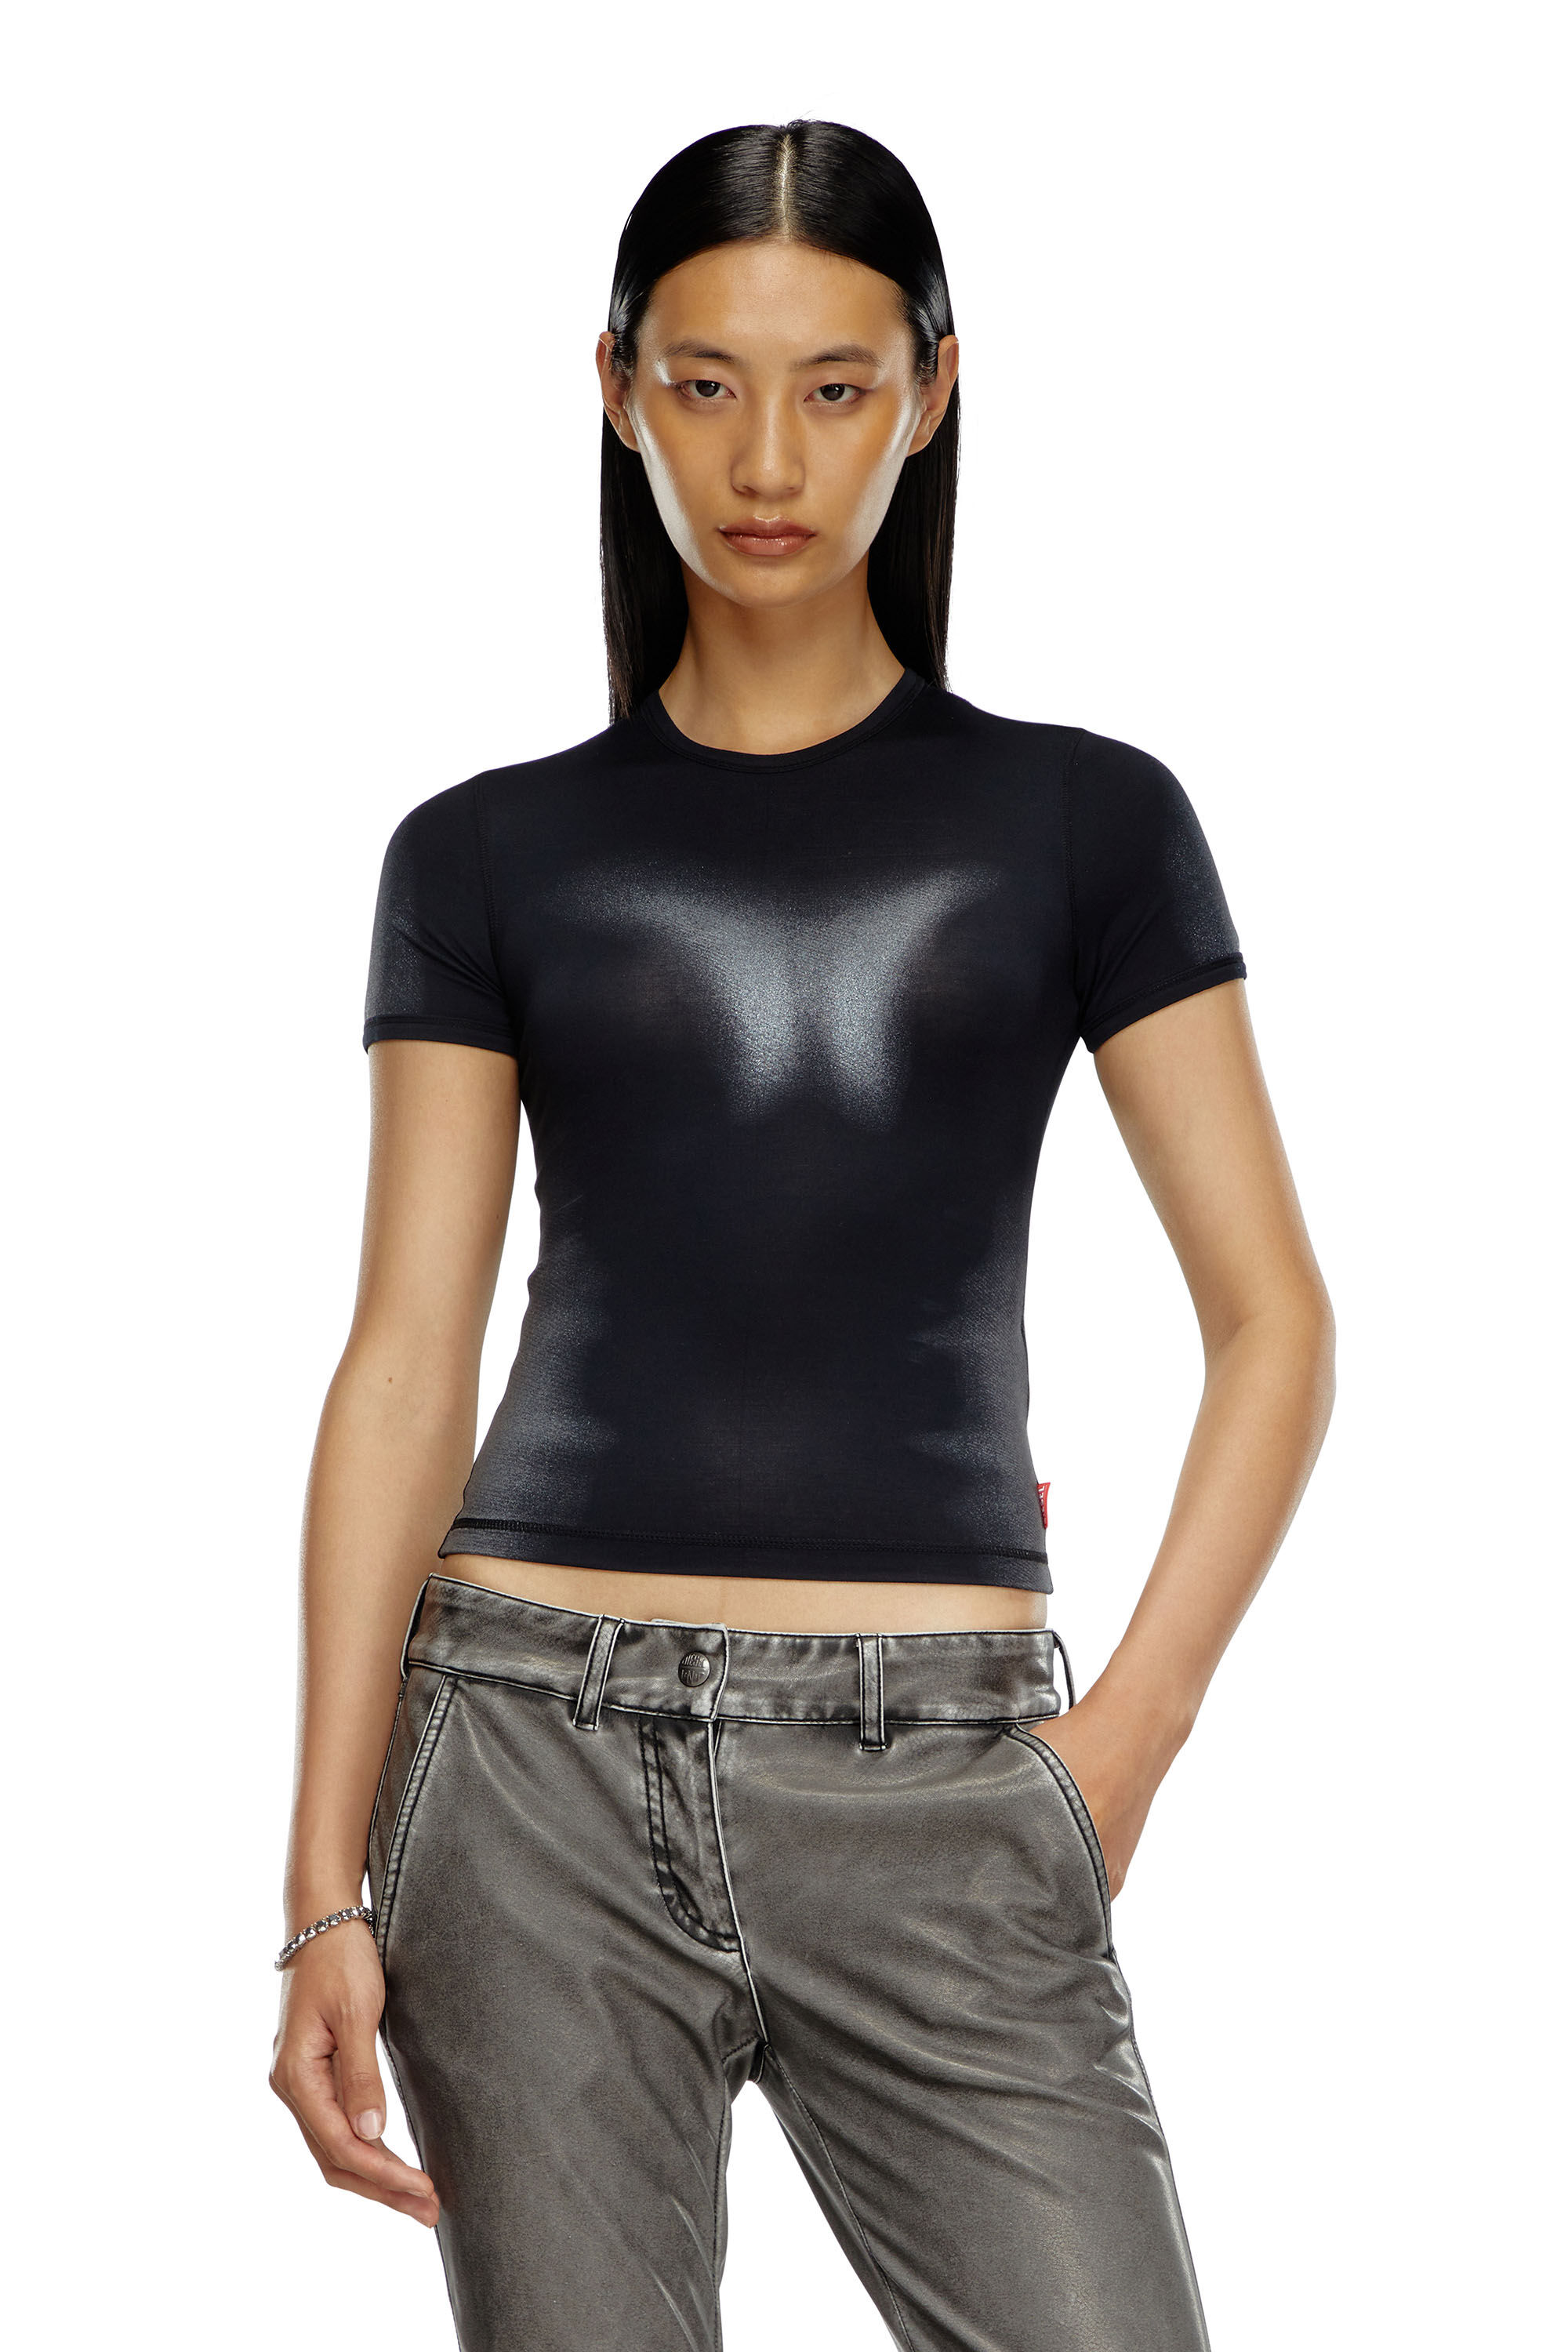 Diesel - T-ANESSA, Femme T-shirt avec effets métallisés in Noir - Image 3